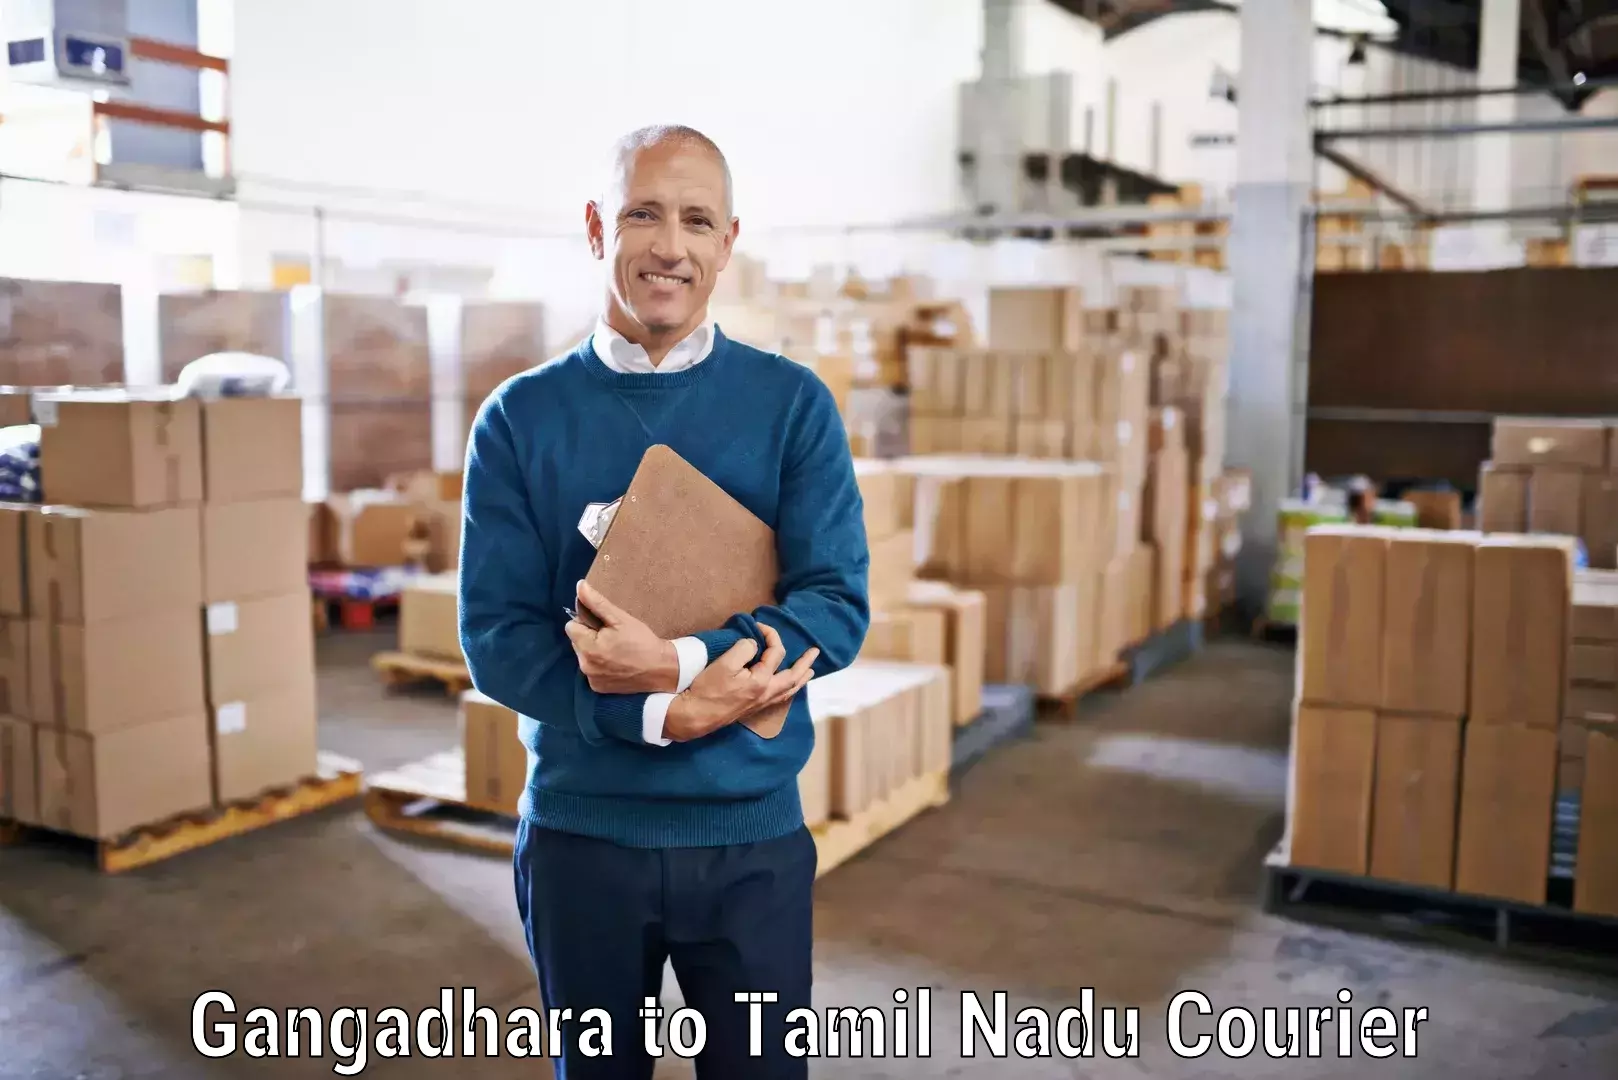 Courier service comparison Gangadhara to Nagapattinam